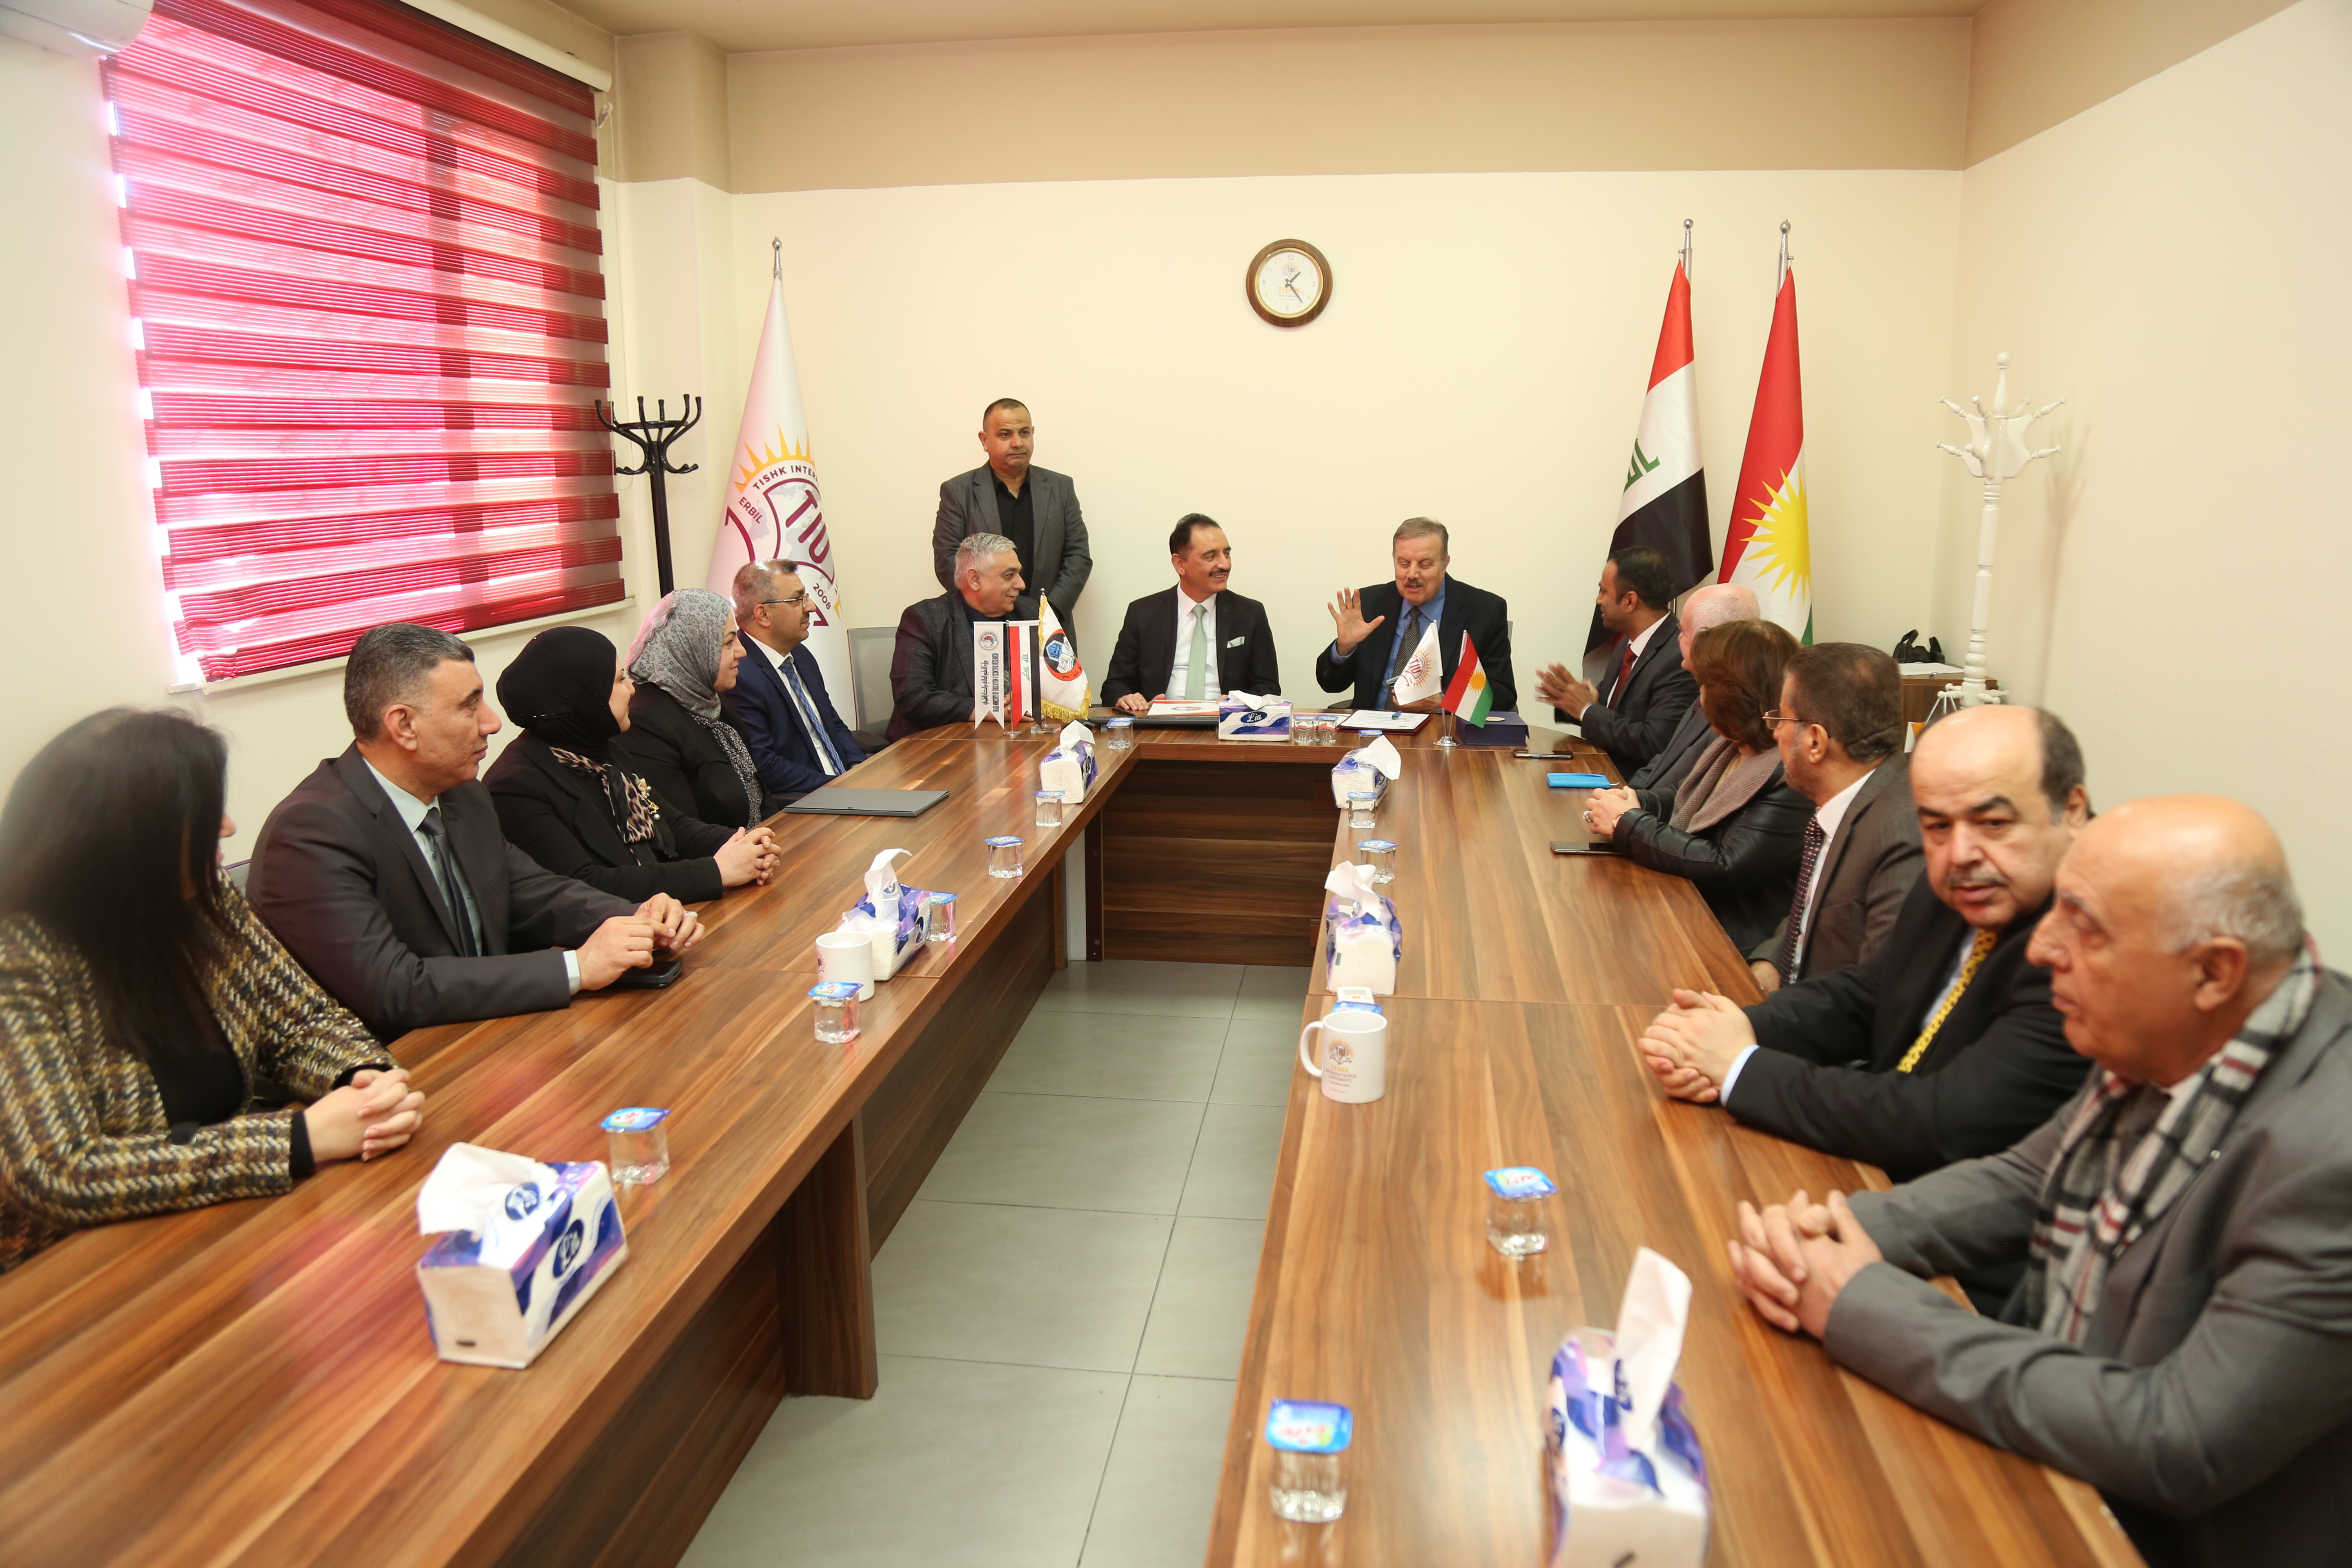 Tishk International University and the University of Mosul signed an MoU